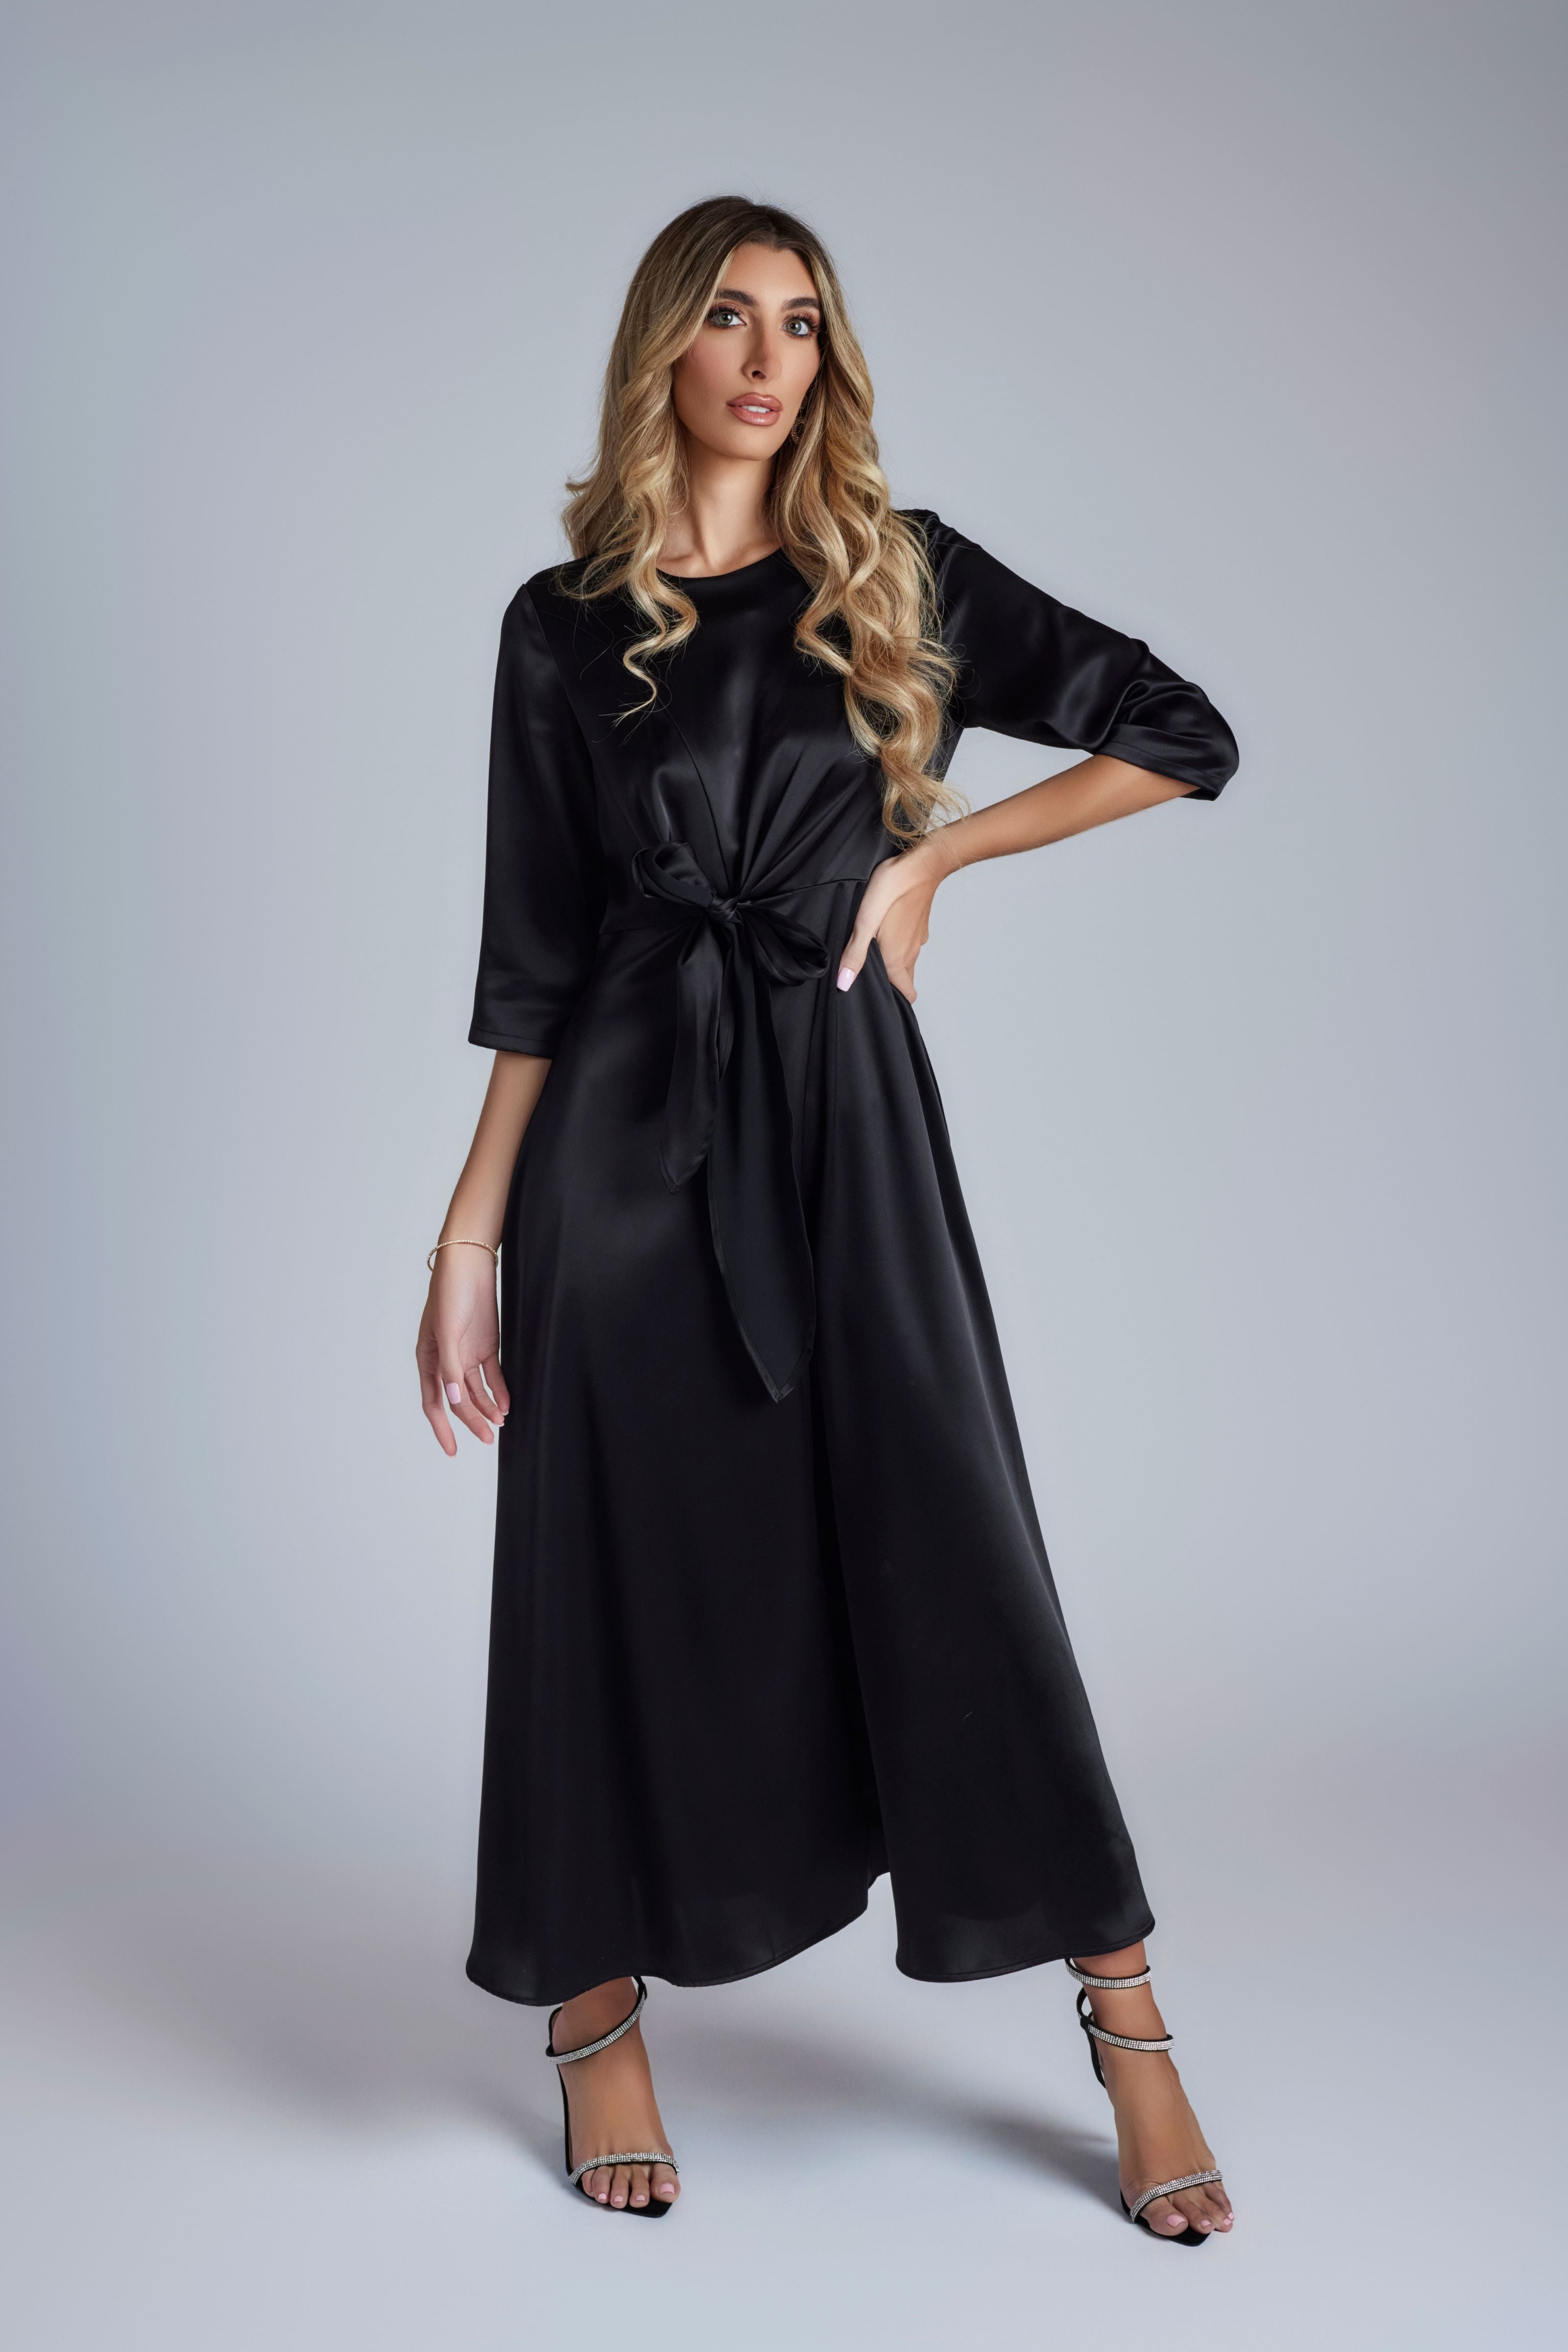 Satin Tie Front Maxi Dress - Black - Olivvi World